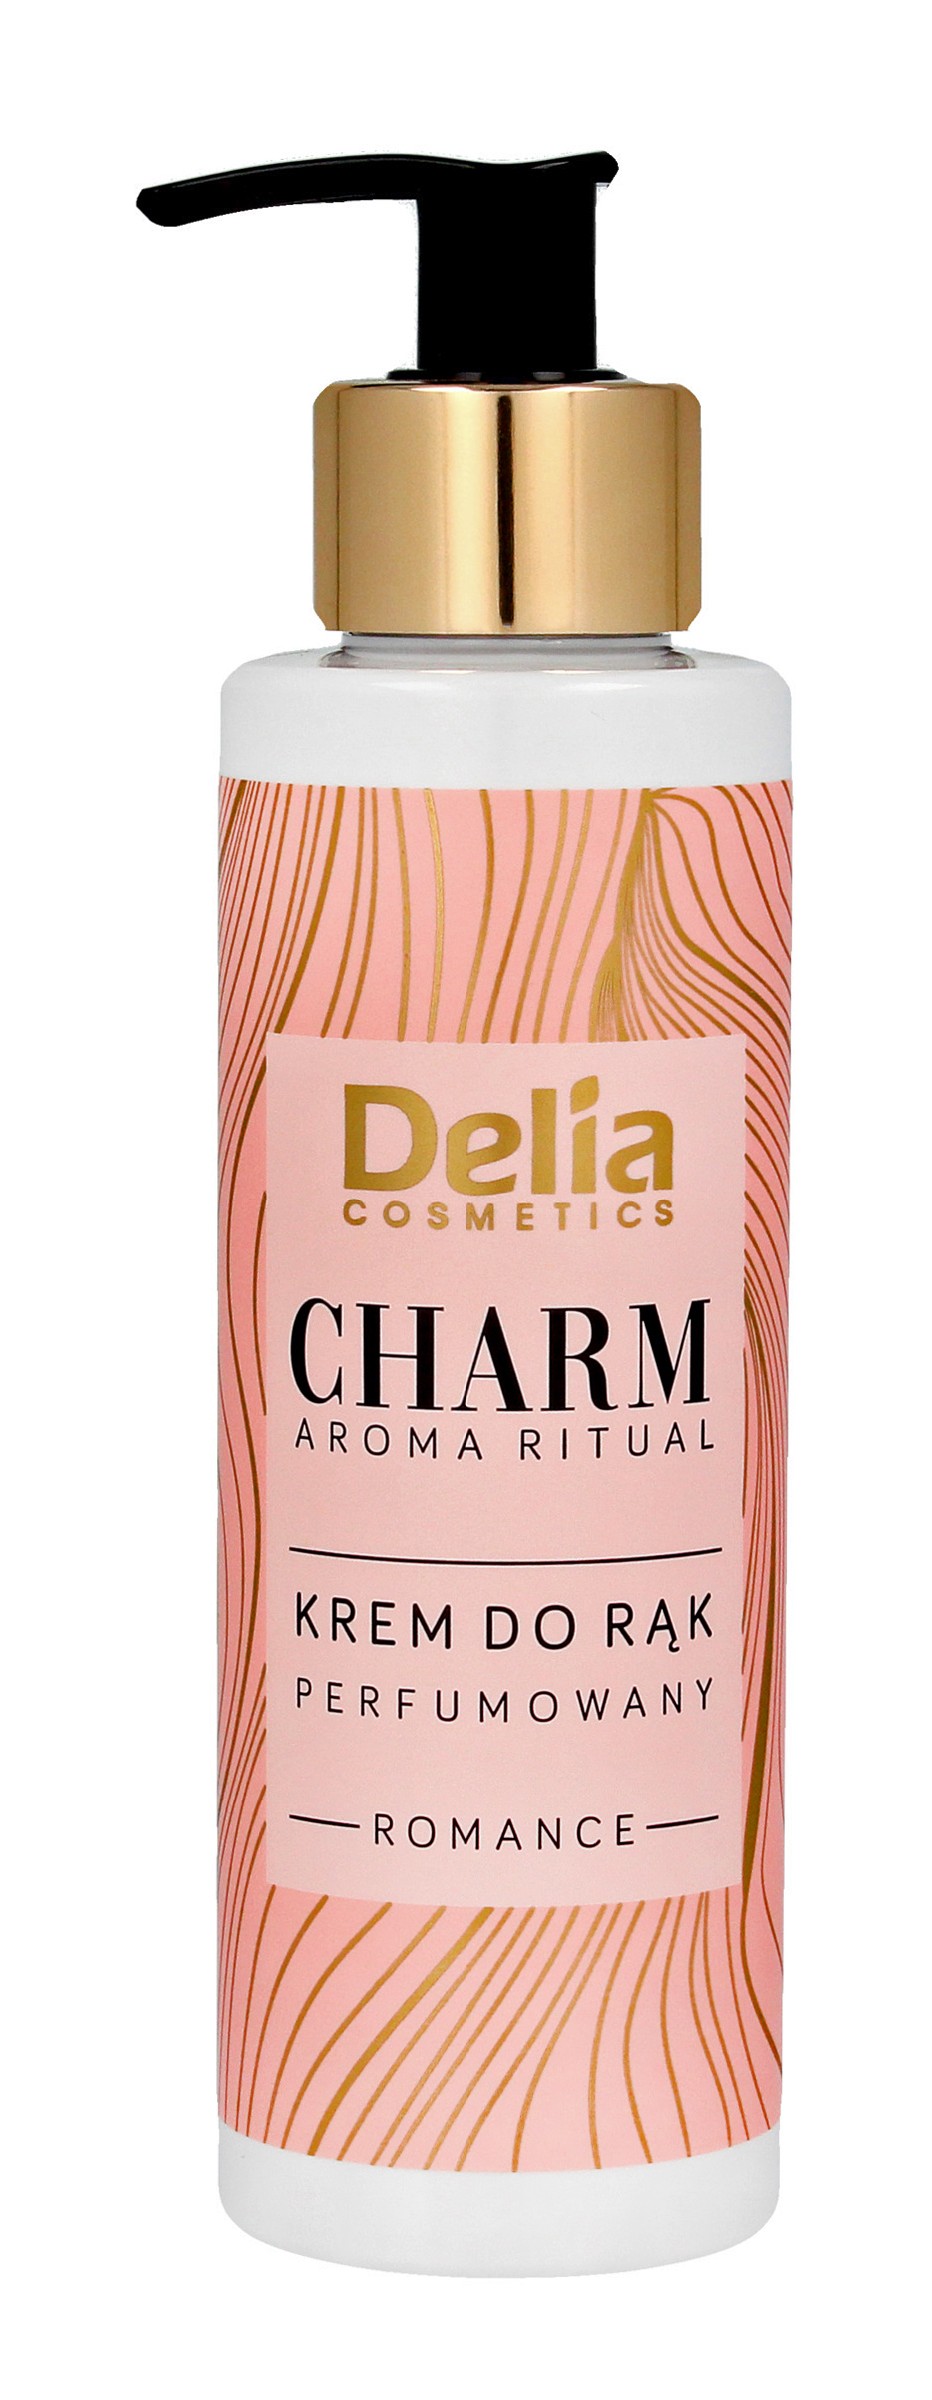 Delia Cosmetics Charm Aroma Ritual Krem do rąk perfumowany - Romance  200ml